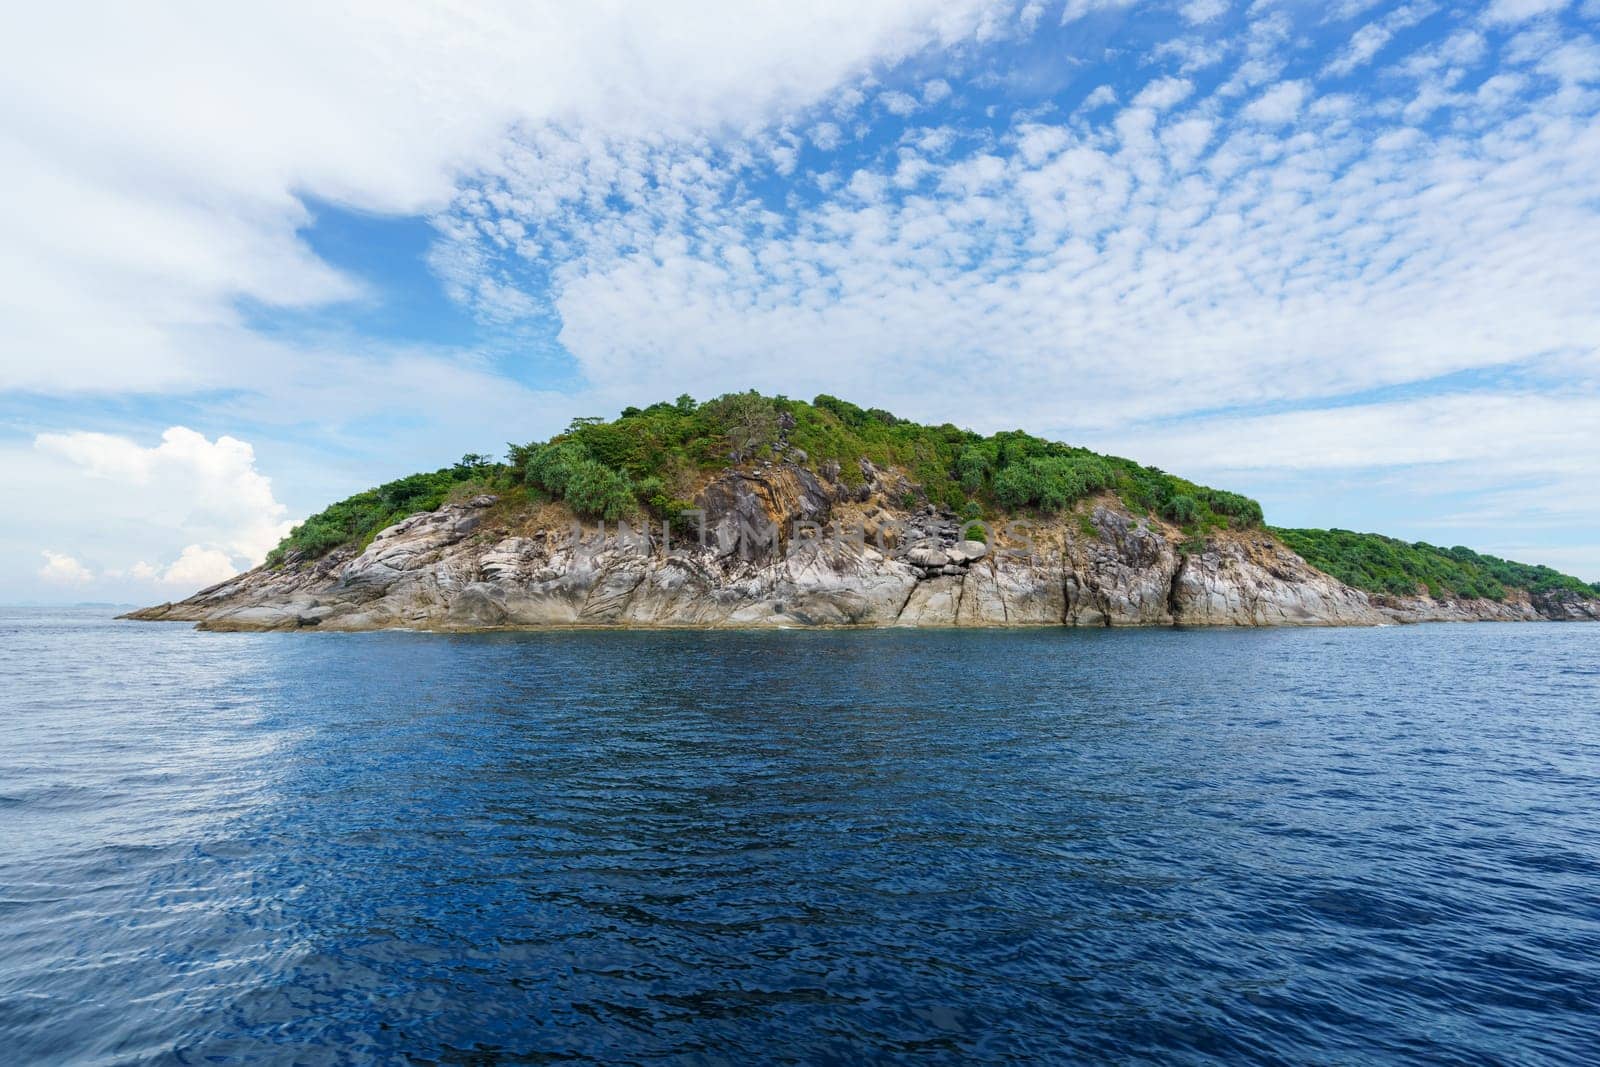 Beautiful seascape - tropical island in ocean. Thailand